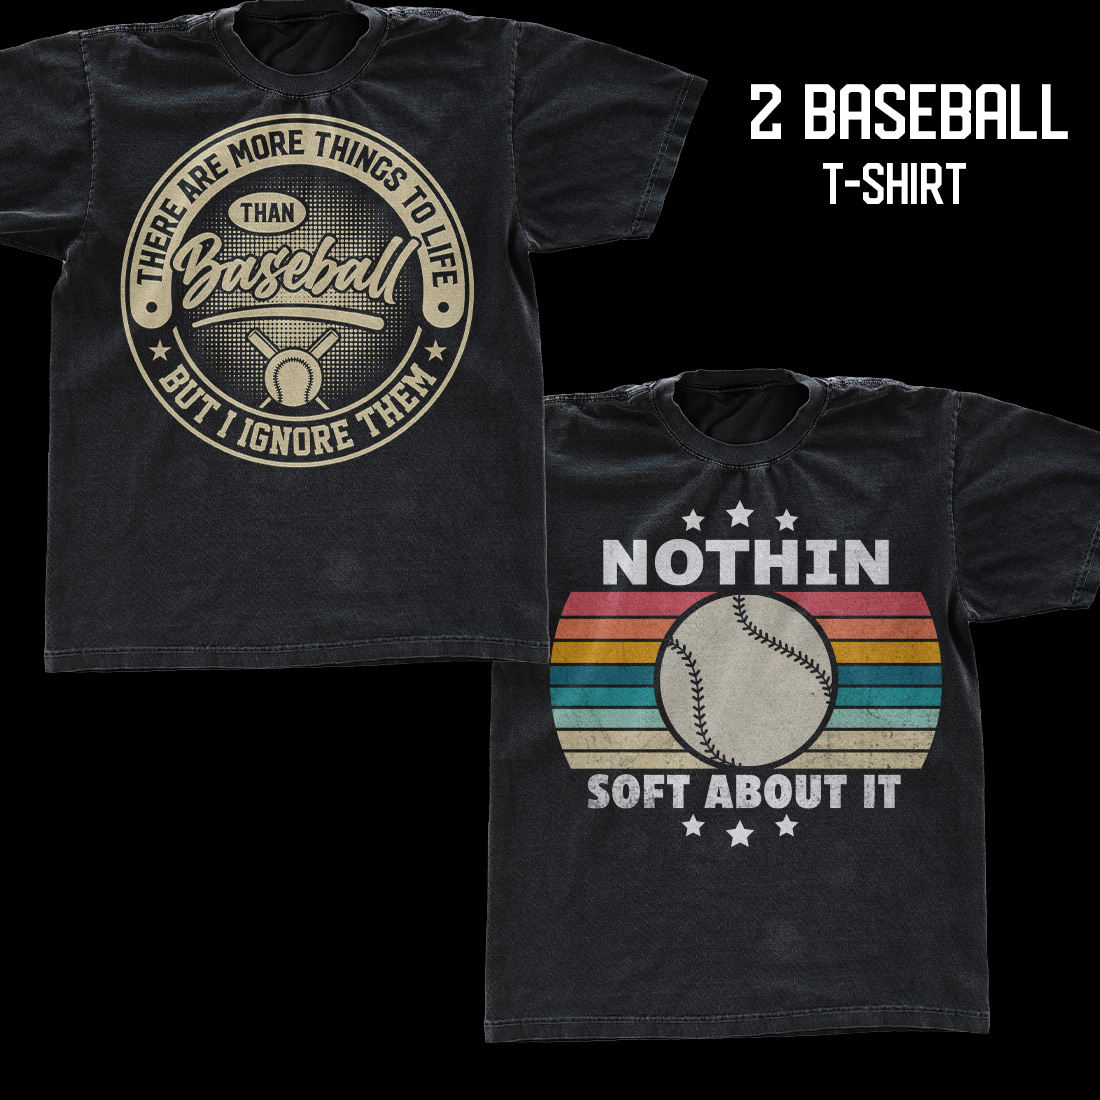 unique baseball shirt designs